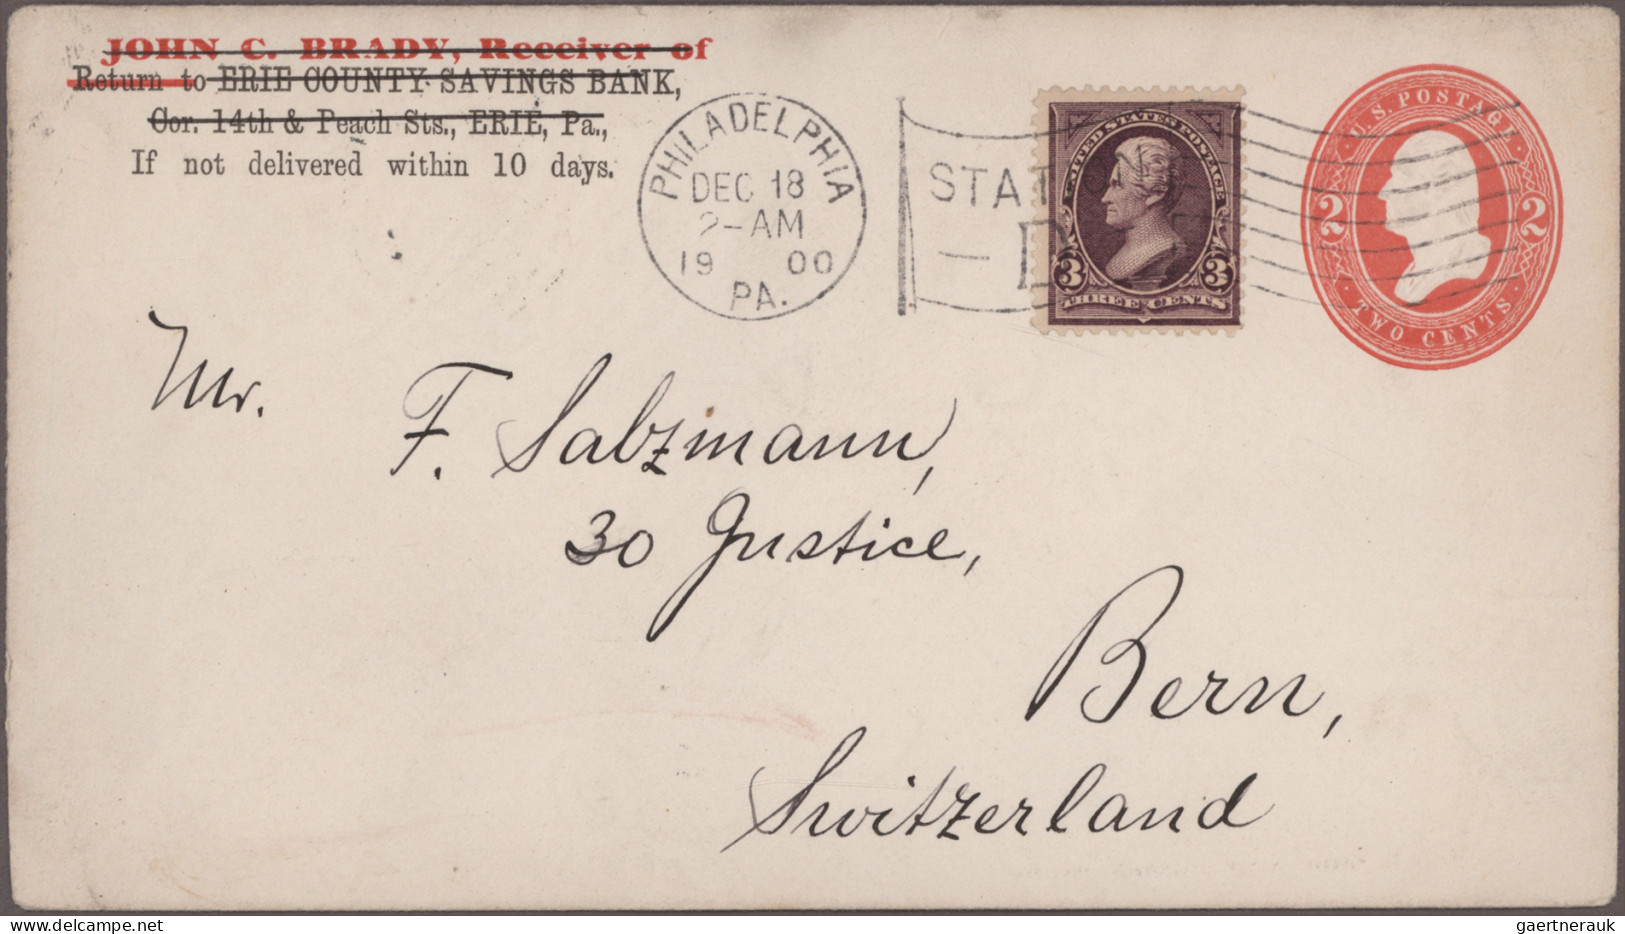 United States - Postal Stationary: 1875/1985 (ca.), mainly up to 1920, balance o